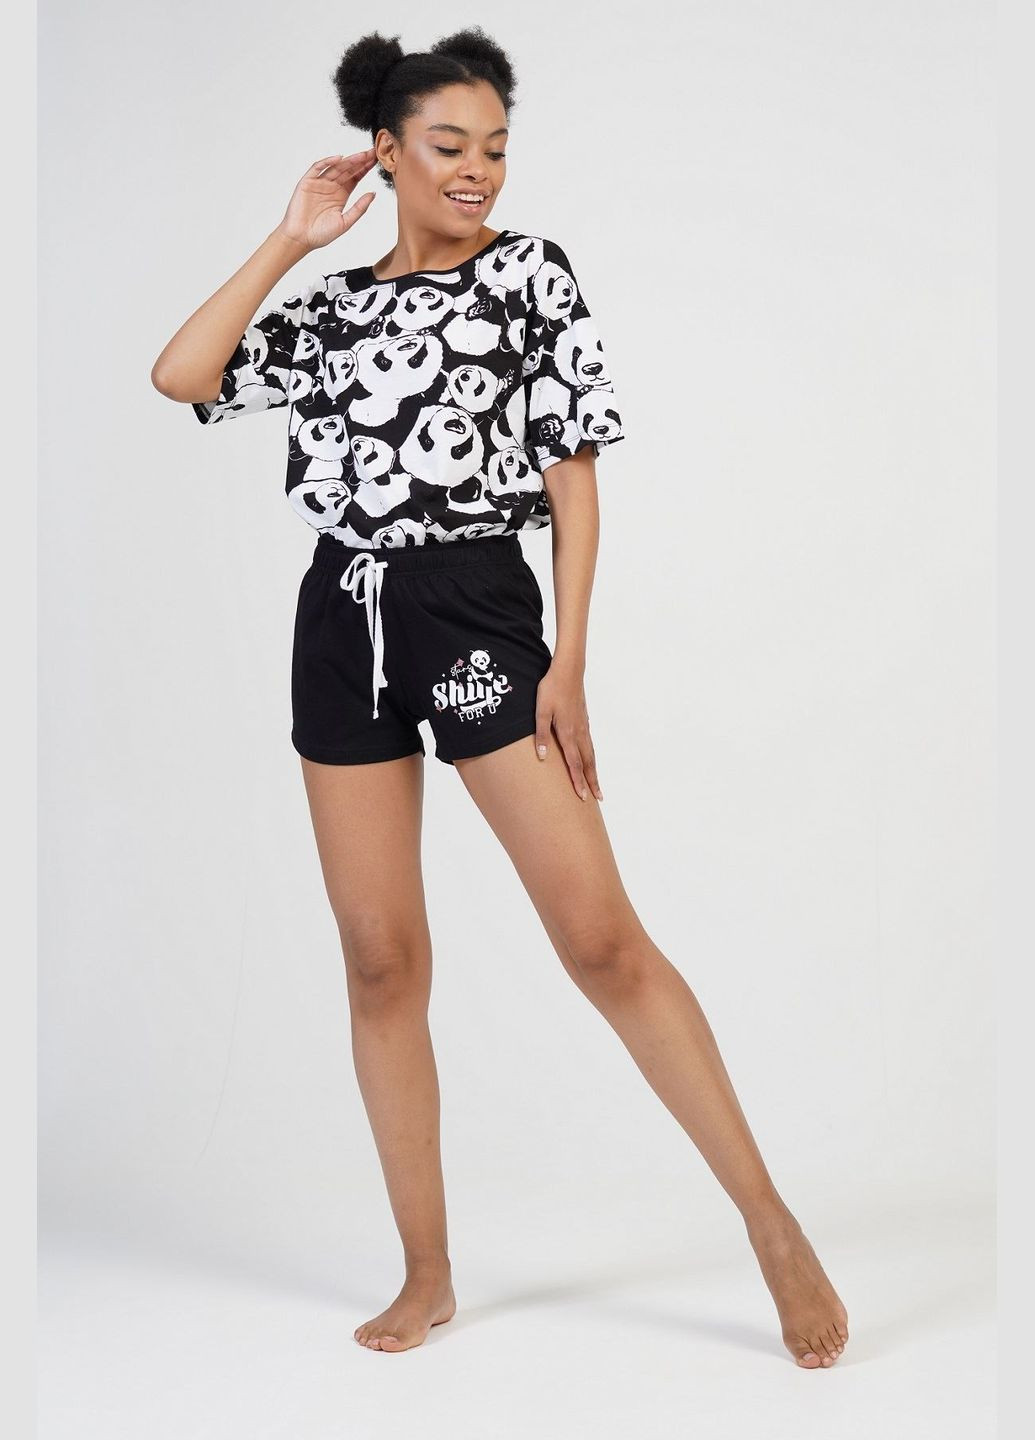 Черная всесезон пижама женская ( футболка, шорты) футболка + шорты Vienetta